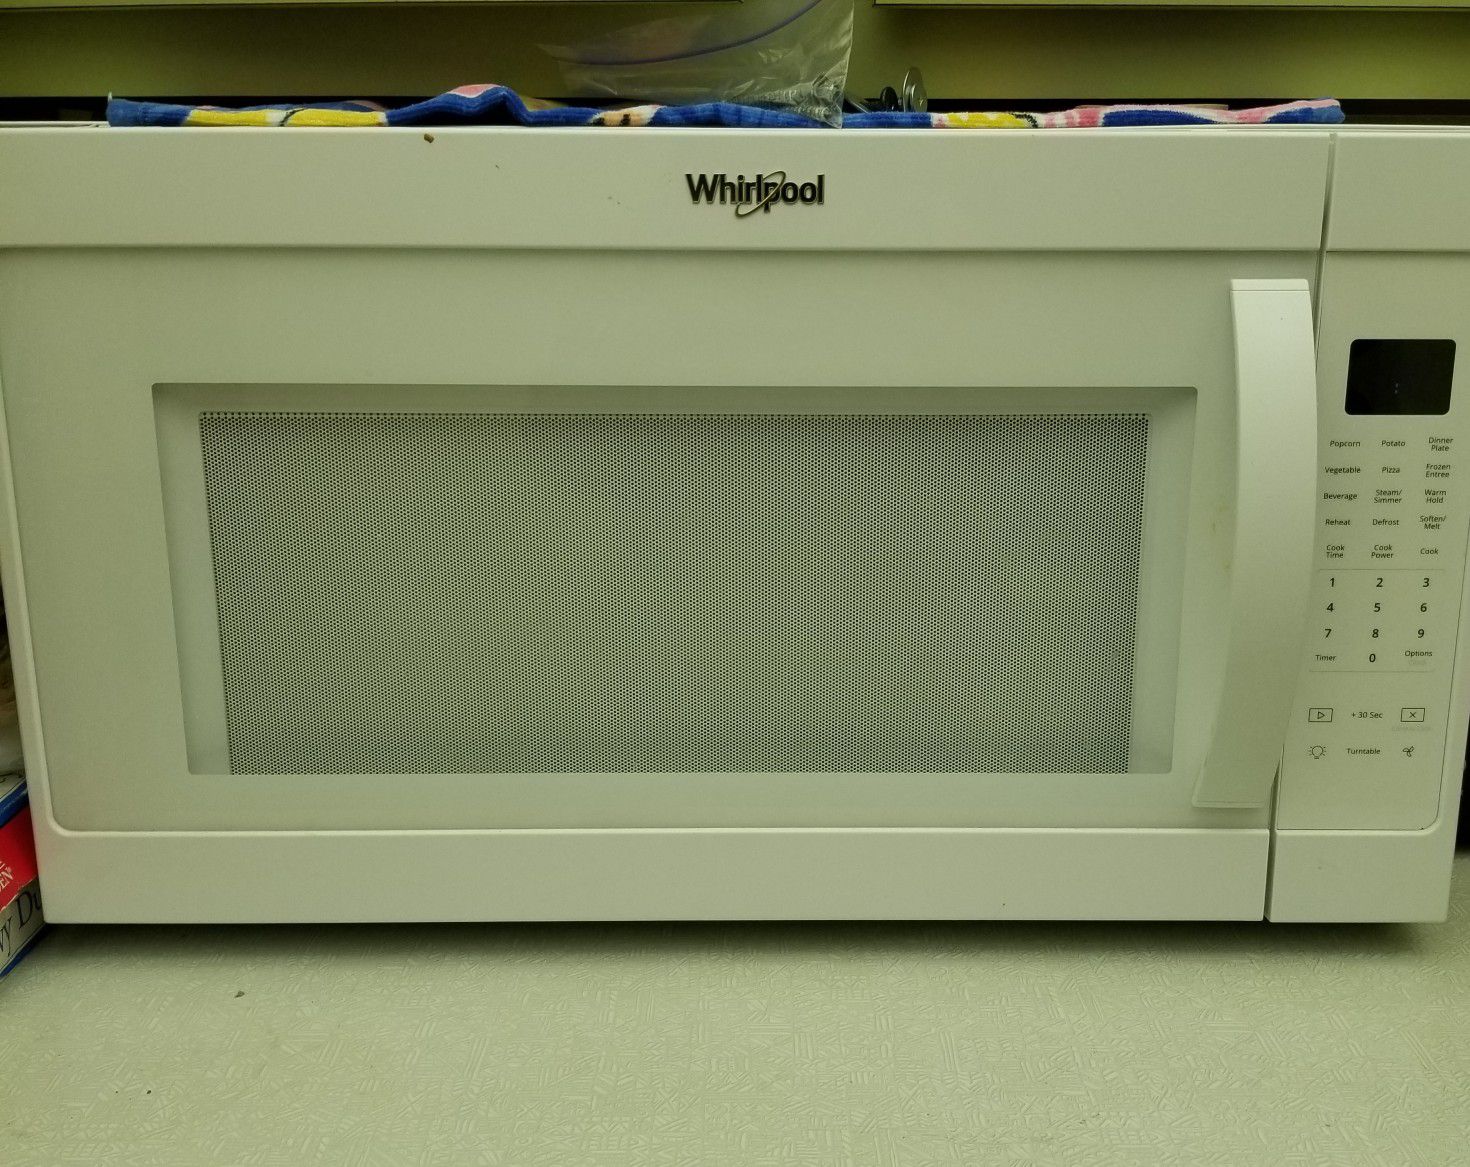 Microwave white